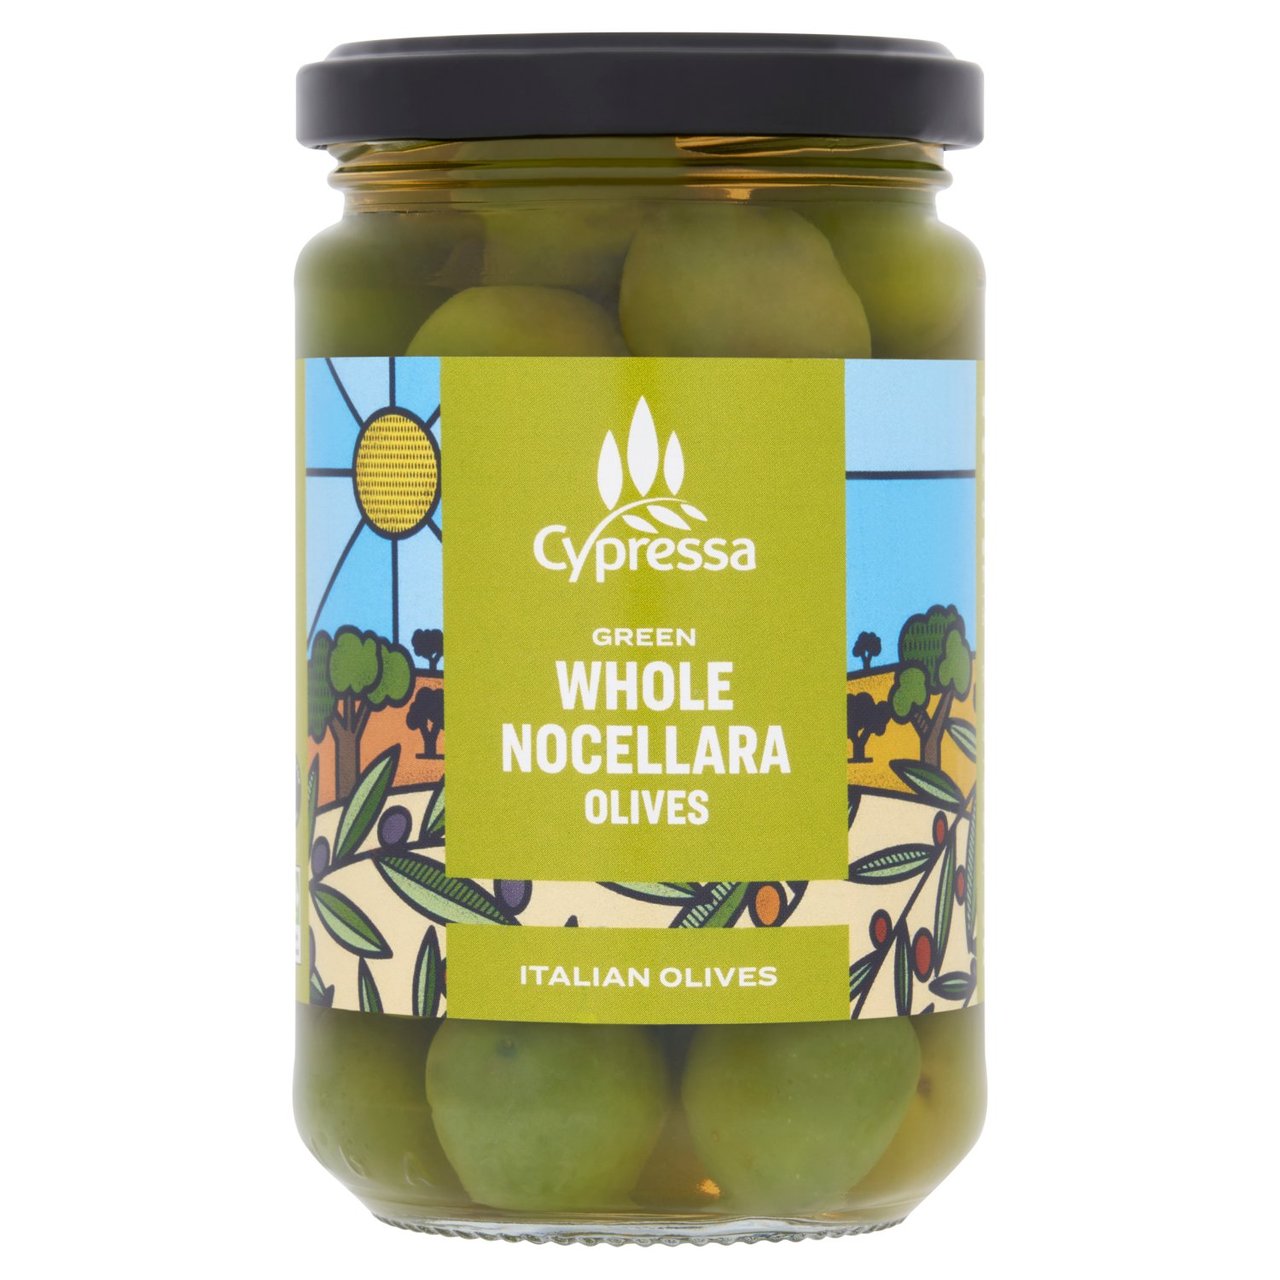 Cypressa Green Whole Nocellara Olives